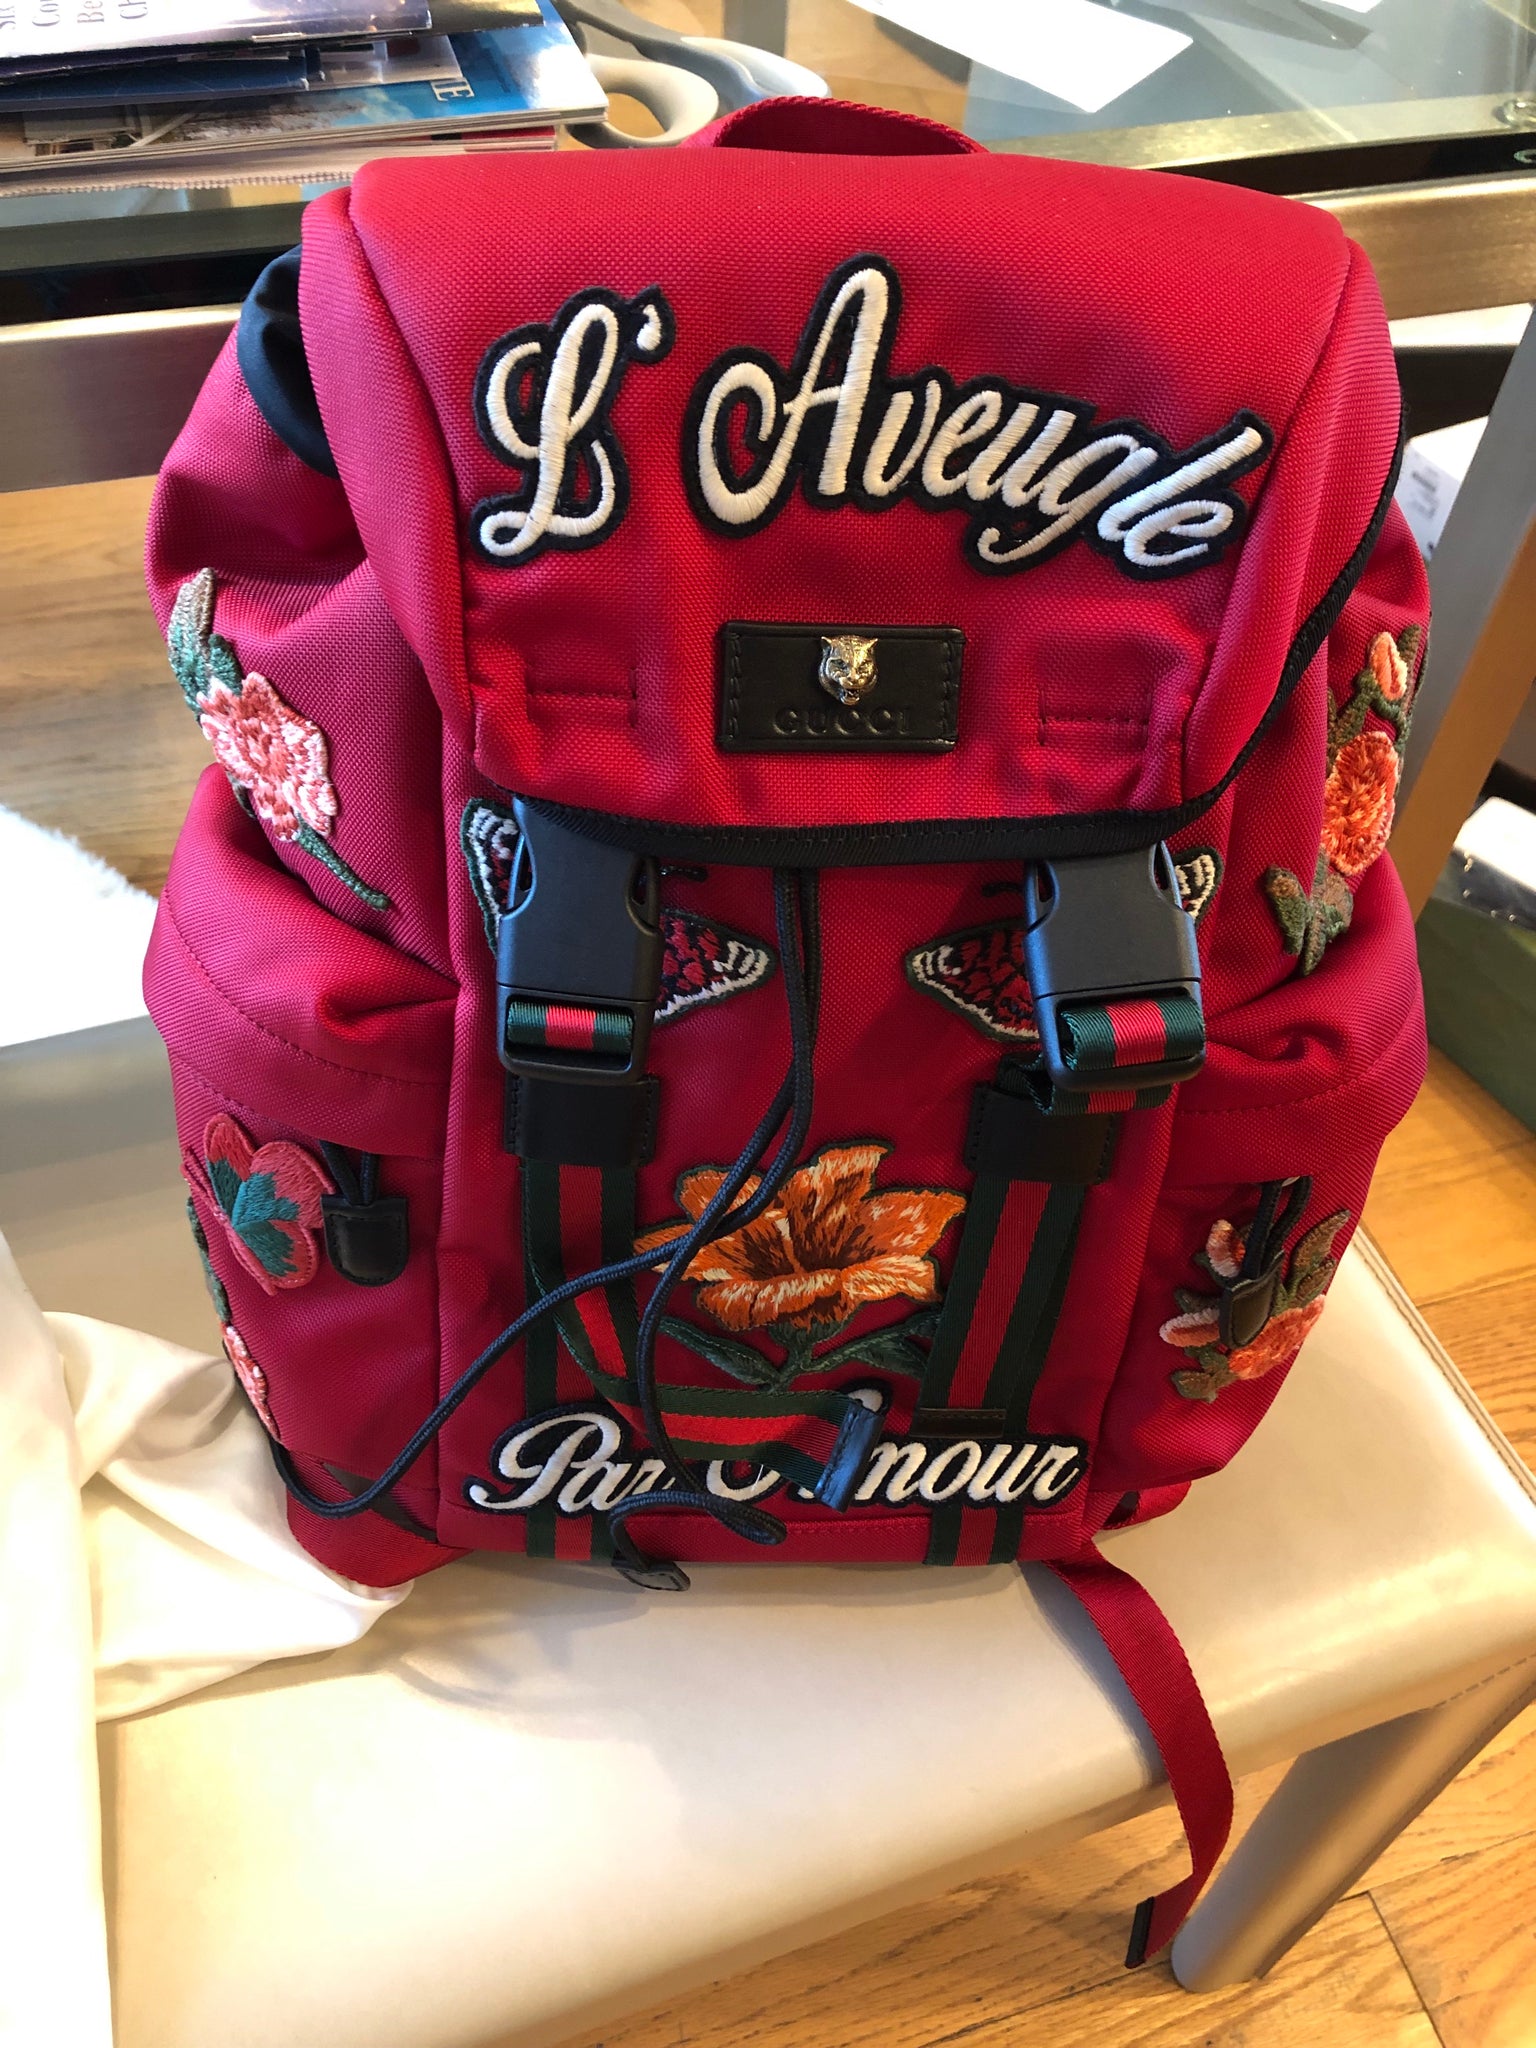 Gucci black logo red striped backpack  Black gucci backpack, Patterned  backpack, Backpacks